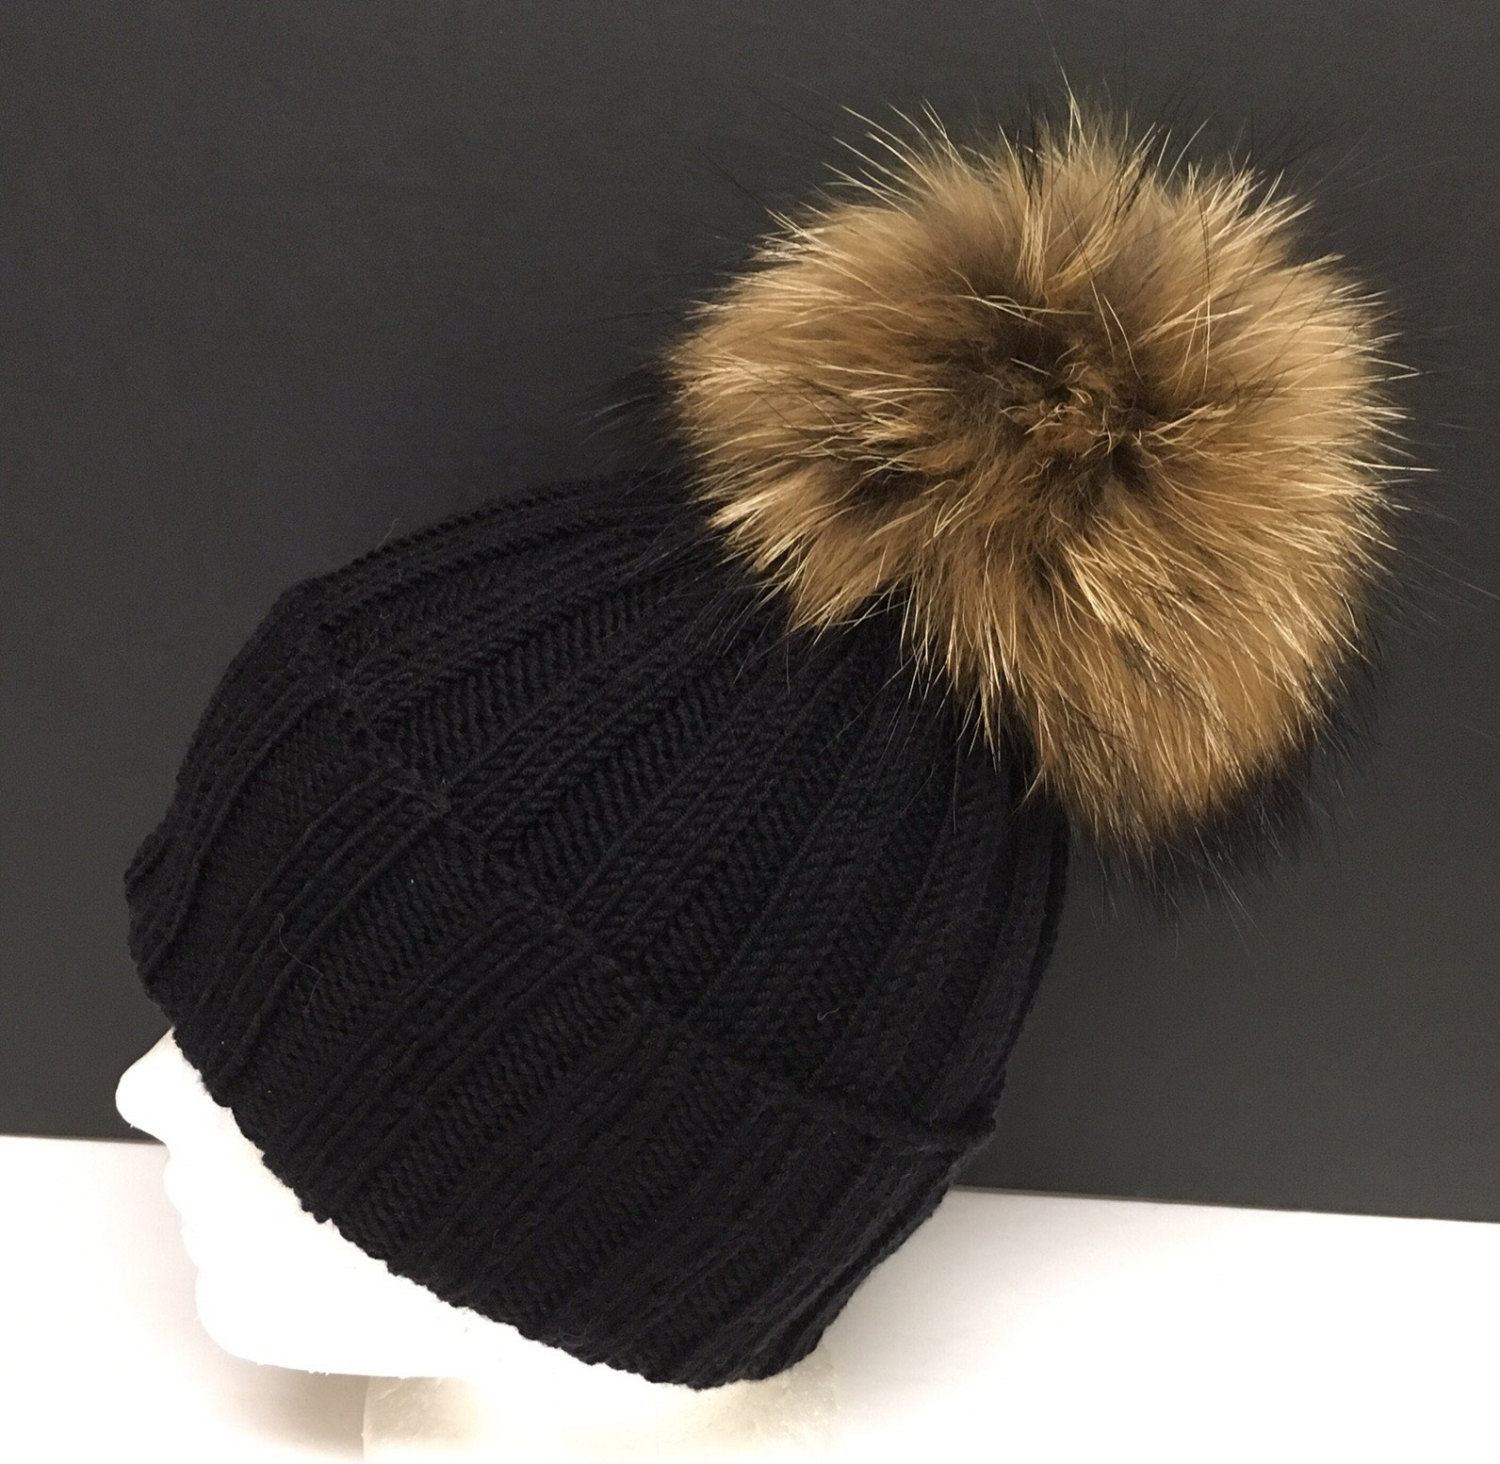 Ribbed Black Wool Beanie Hat - Natural Brown Raccoon Fur Pom Pom 99